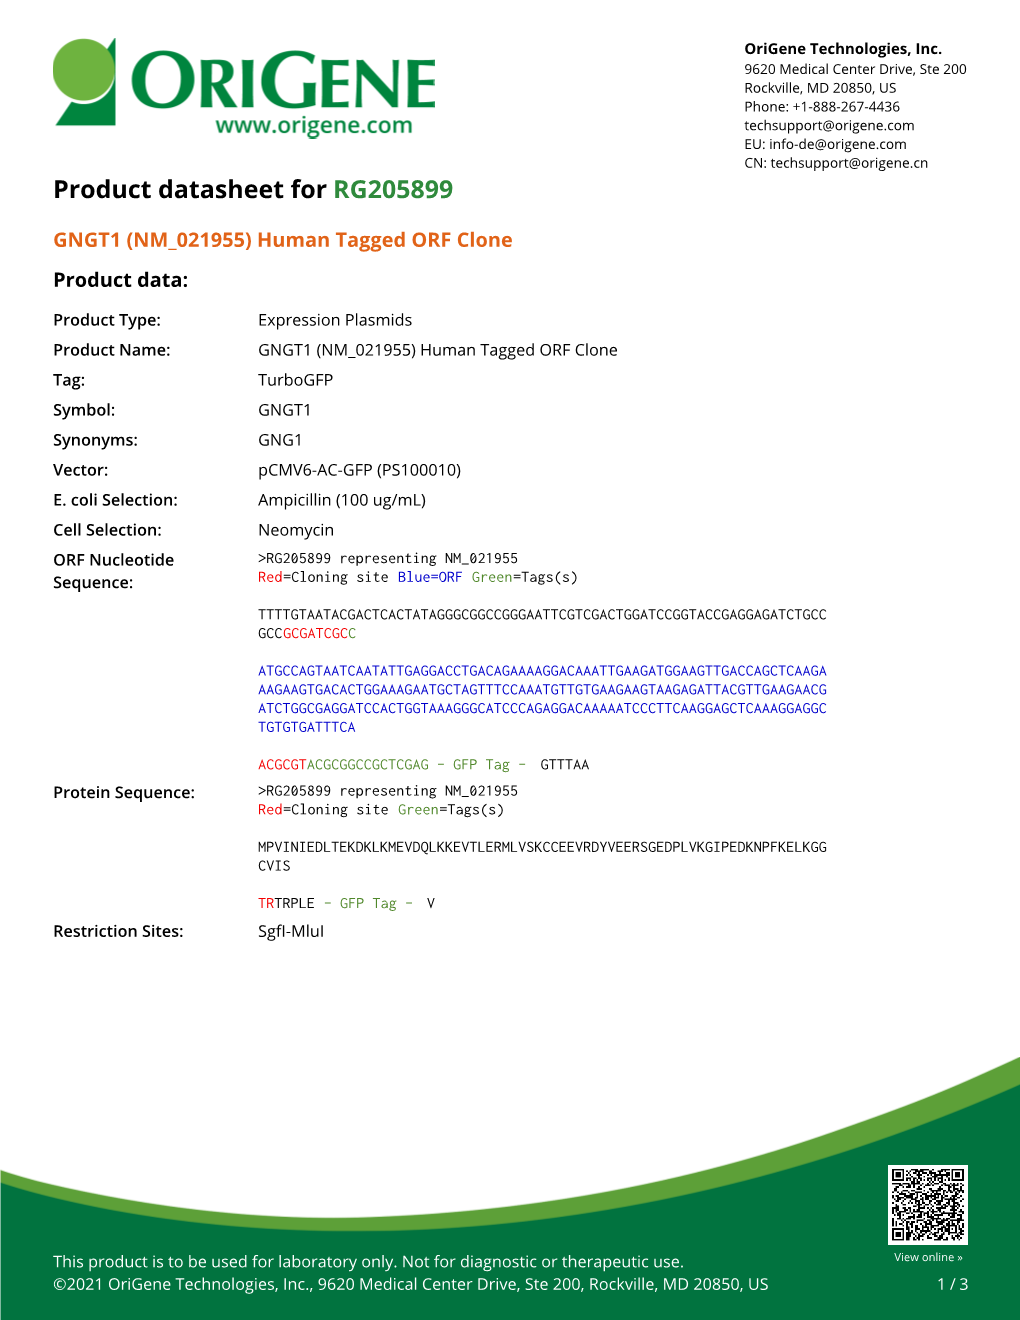 GNGT1 (NM 021955) Human Tagged ORF Clone Product Data